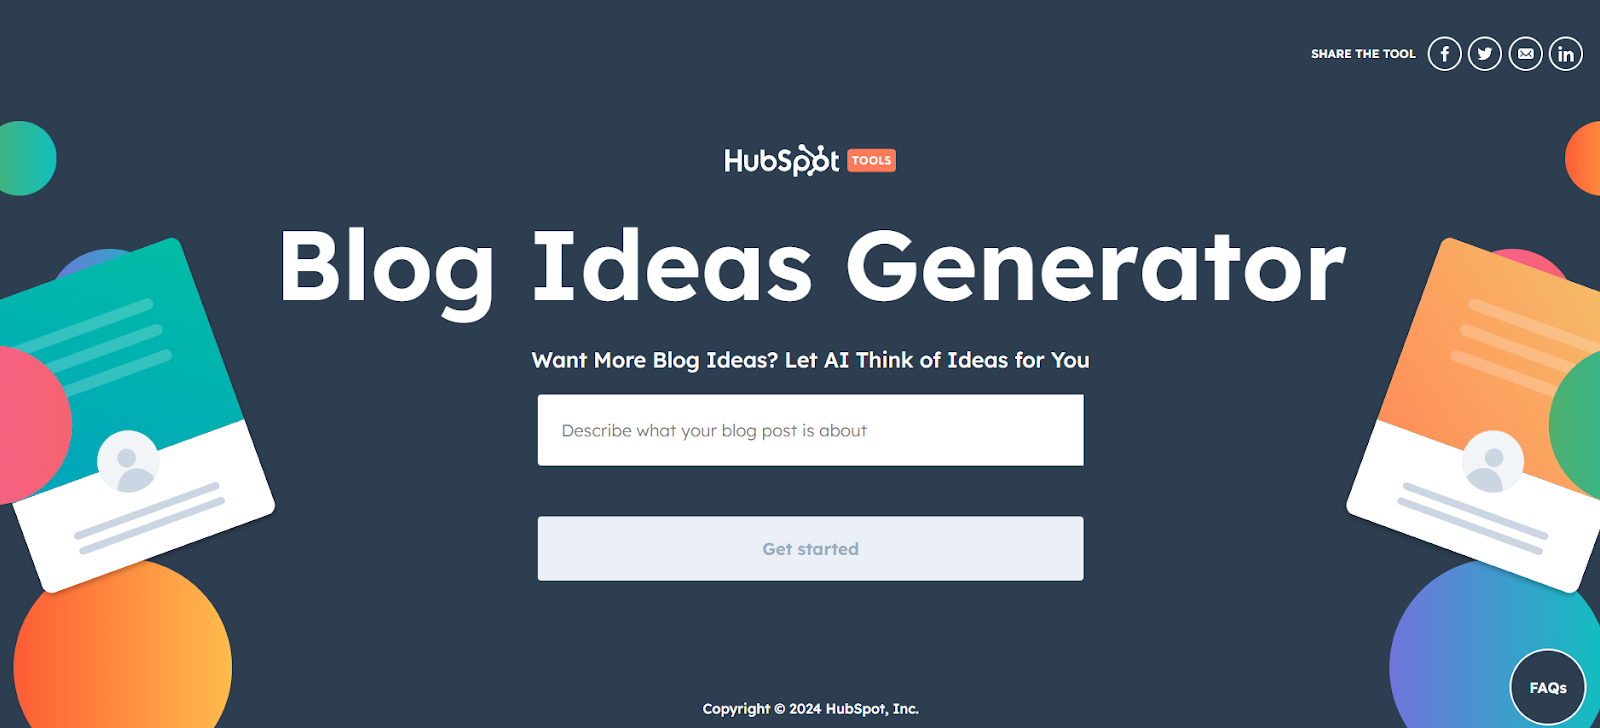 Overcome writer’s block with HubSpot’s Blog Idea Generator